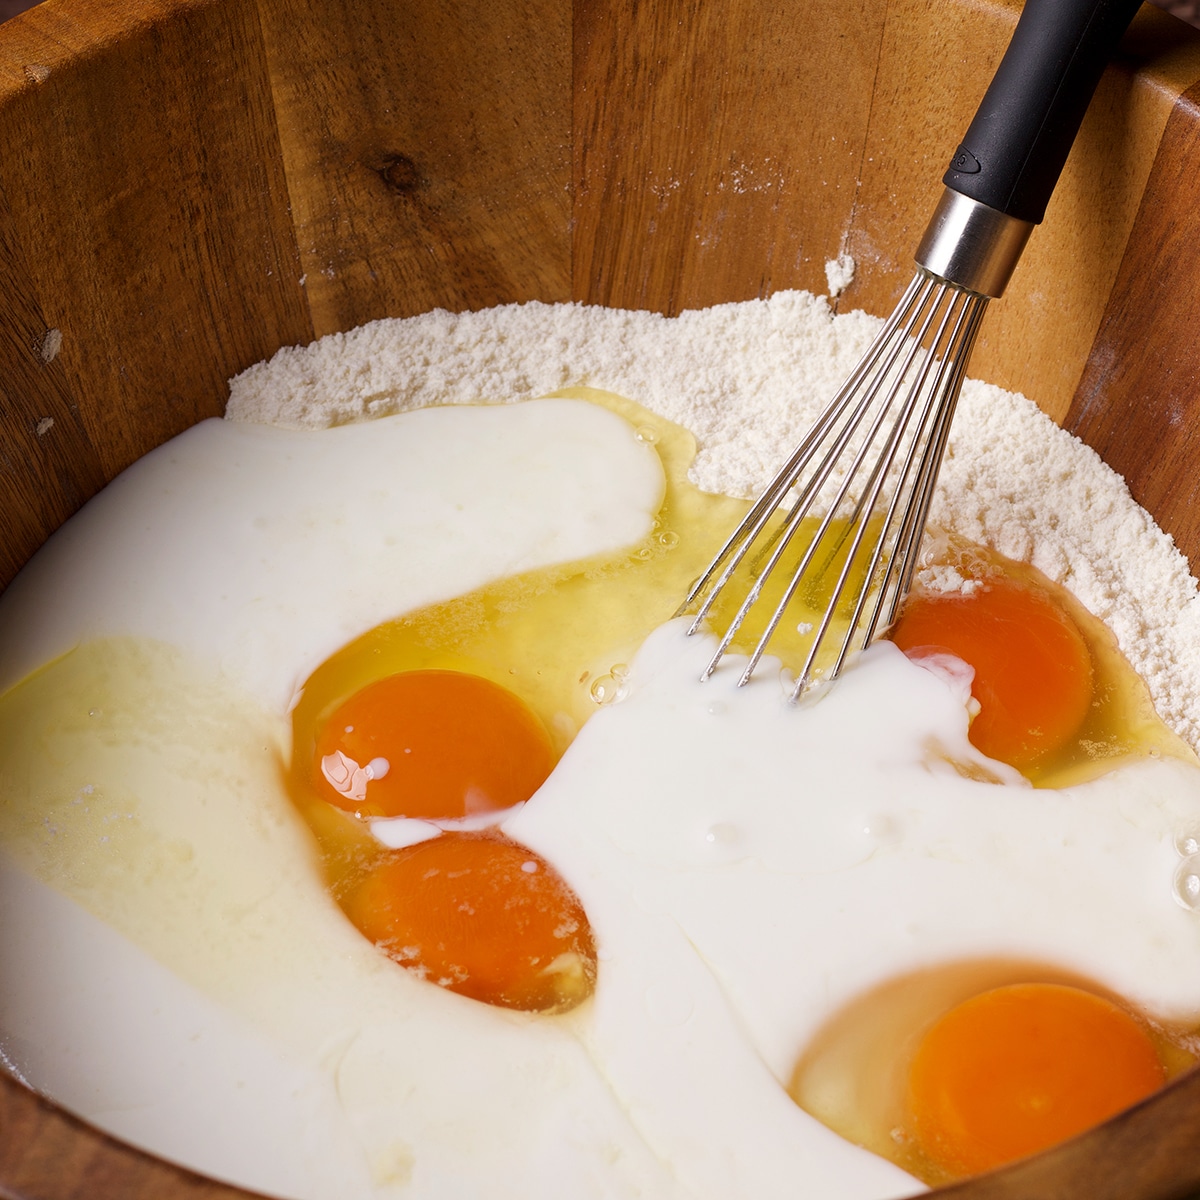 Adding eggs and buttermilk to flour to make pancakes.